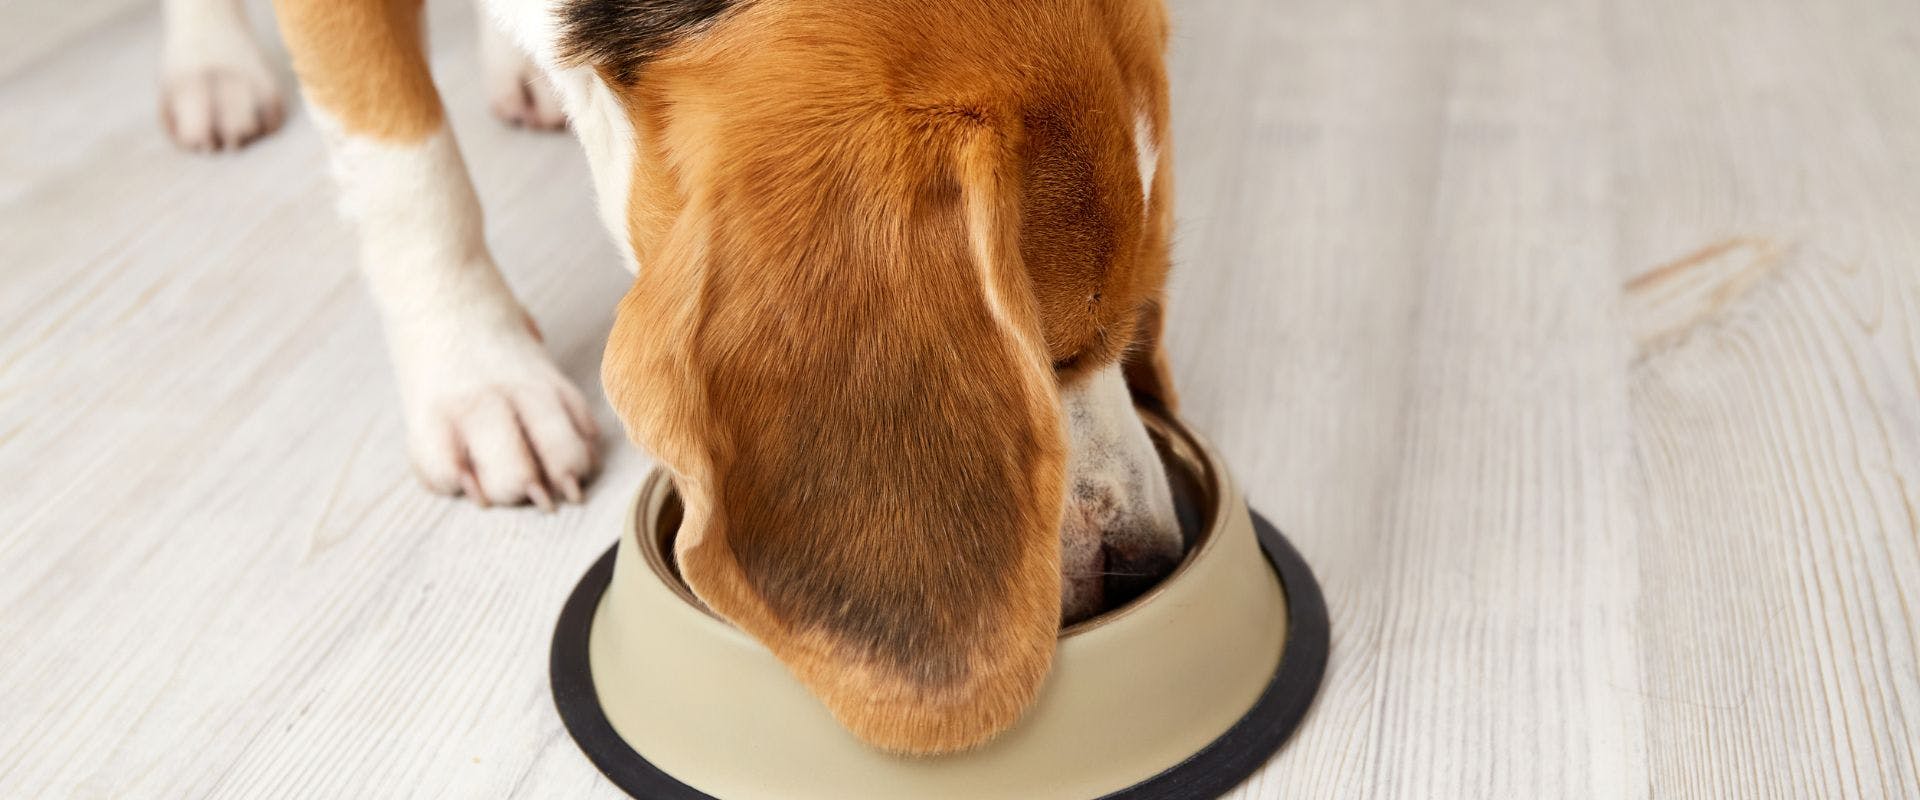 Beagle dog eating from a dog bowl